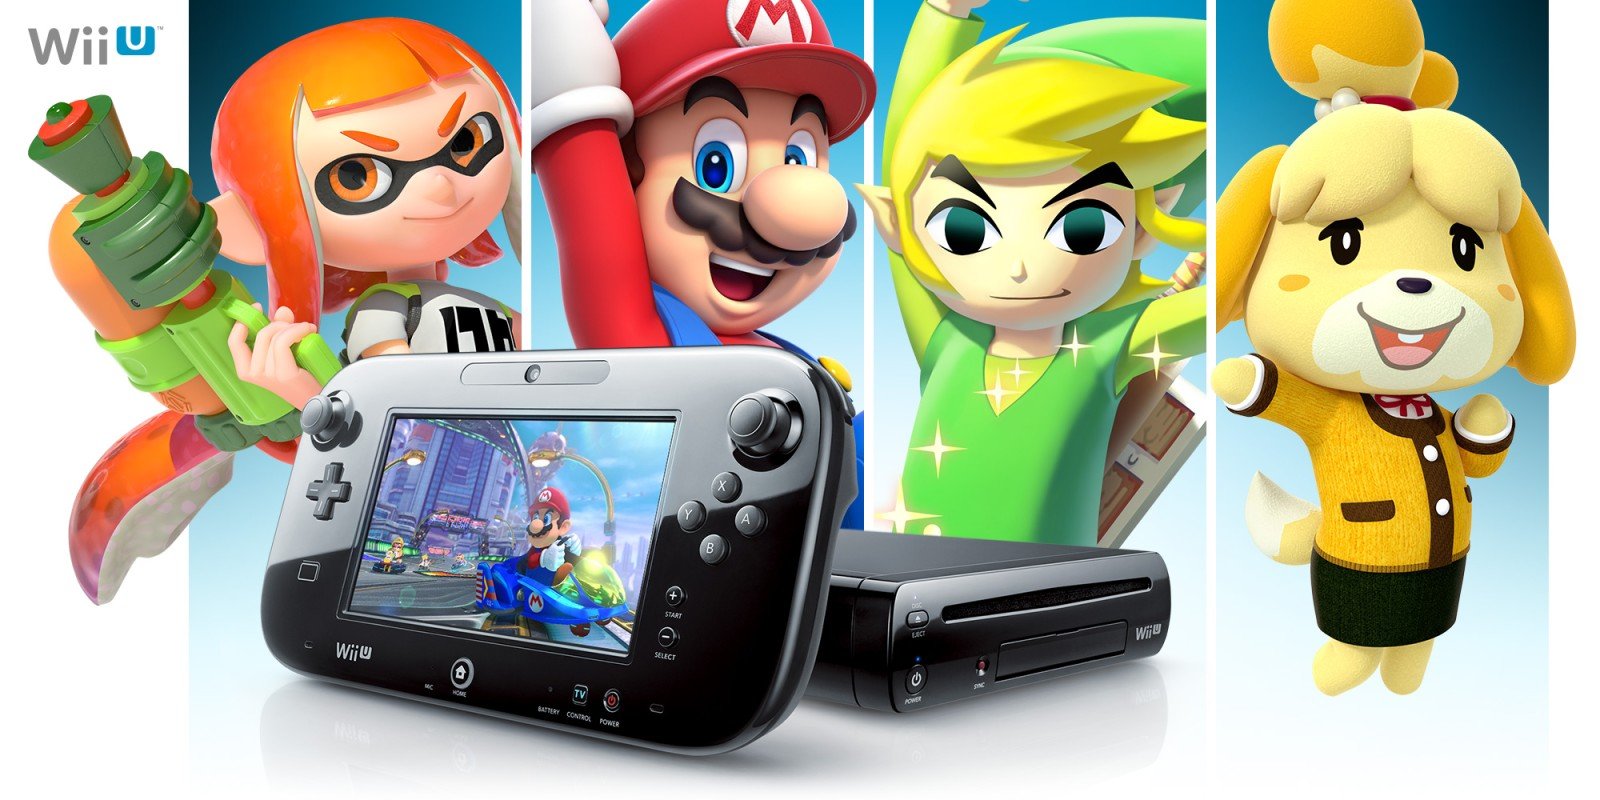 strottenhoofd kwaad Pennenvriend Nintendo Wii U System Update 5.5.5 U Is Here For More "Stability"